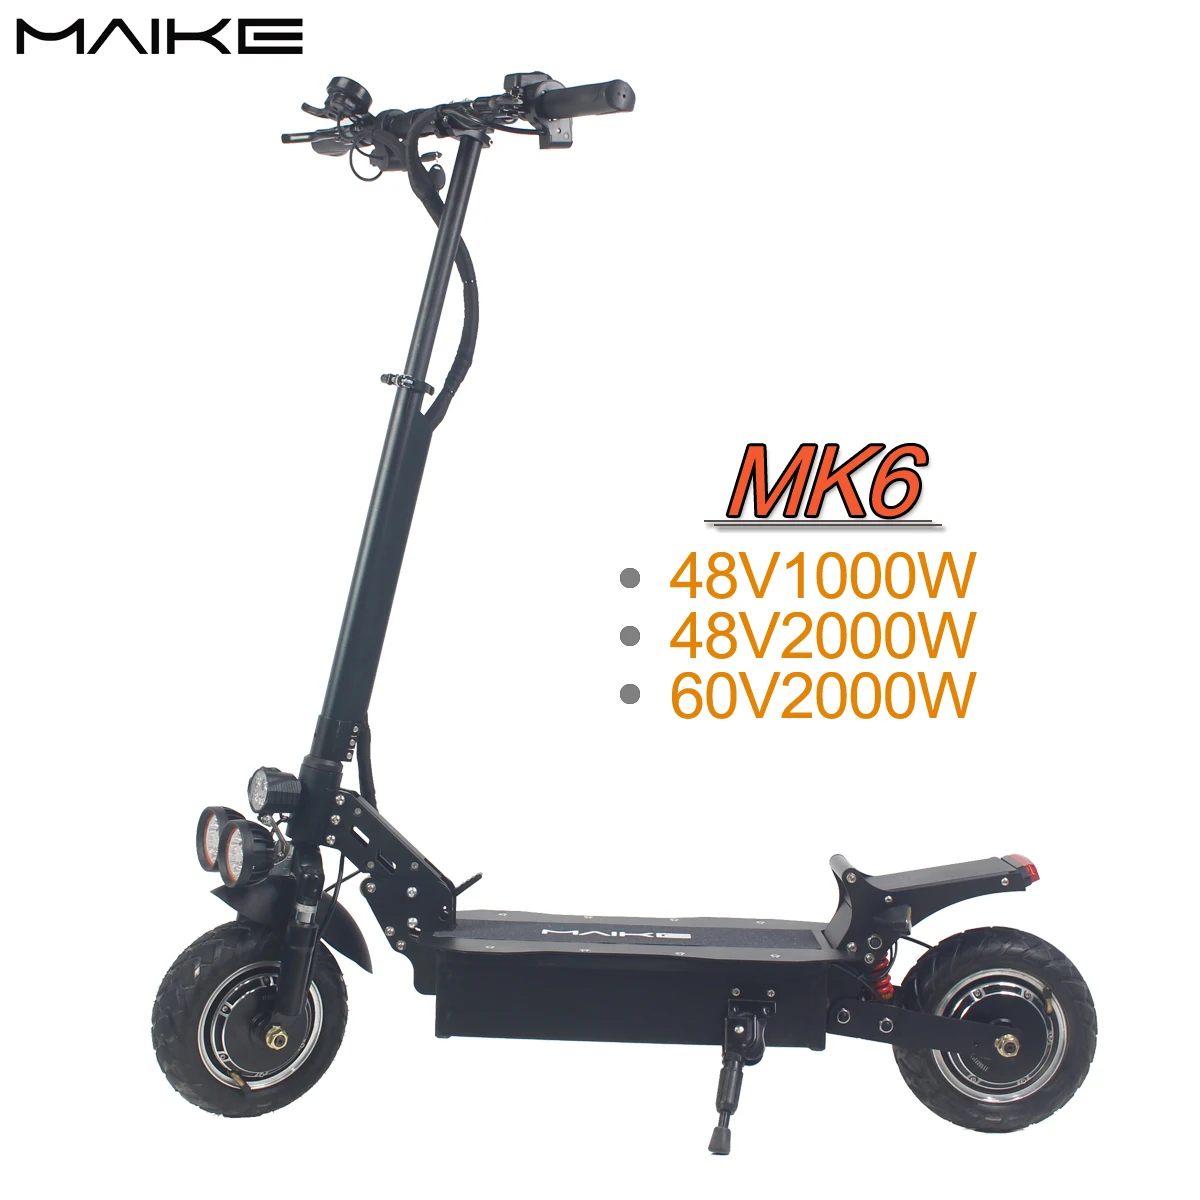 

Cheap maike MK6 10inch 1000w 20AH battery powerful scooter electric dual motor, Black